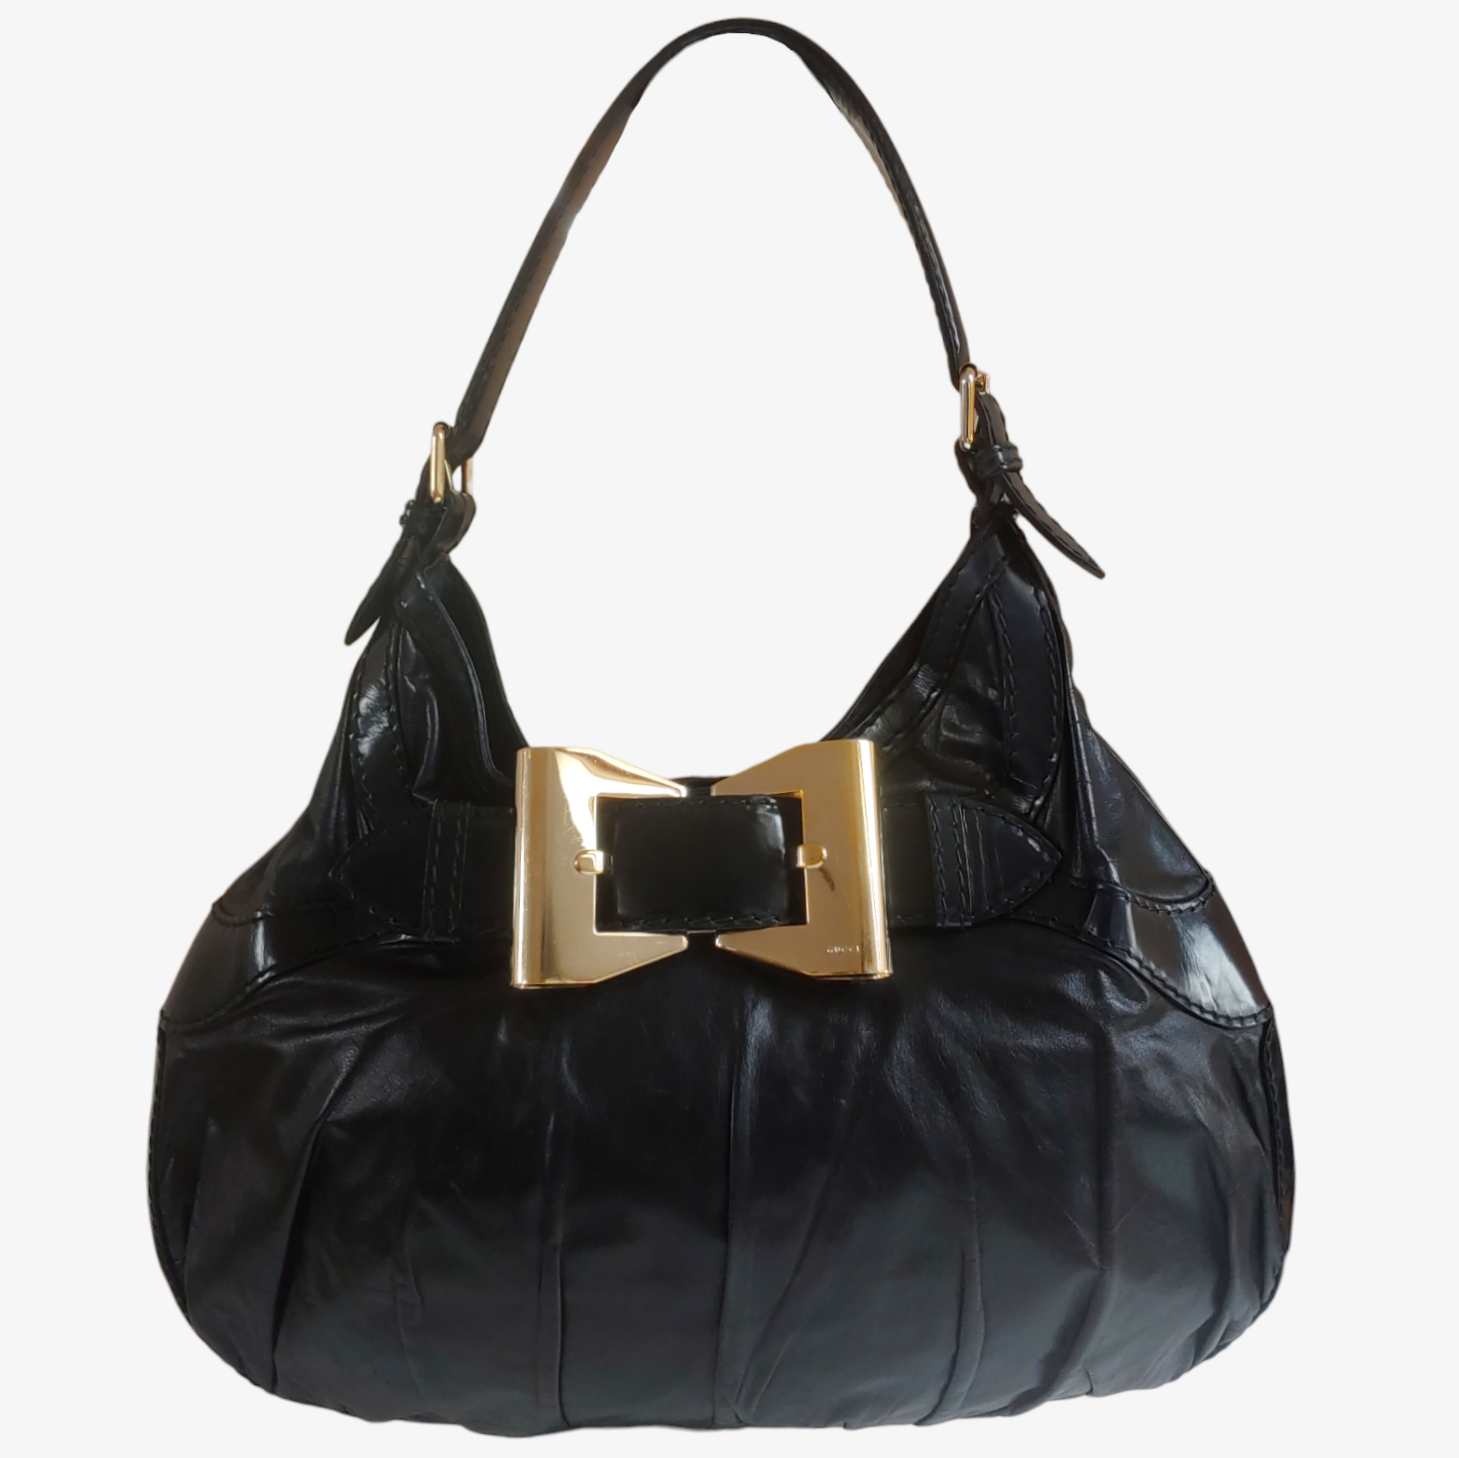 Gucci Queen Hobo Dialux Black Leather Buckle Shoulder Bag 189884 002058 - Casspios Dream